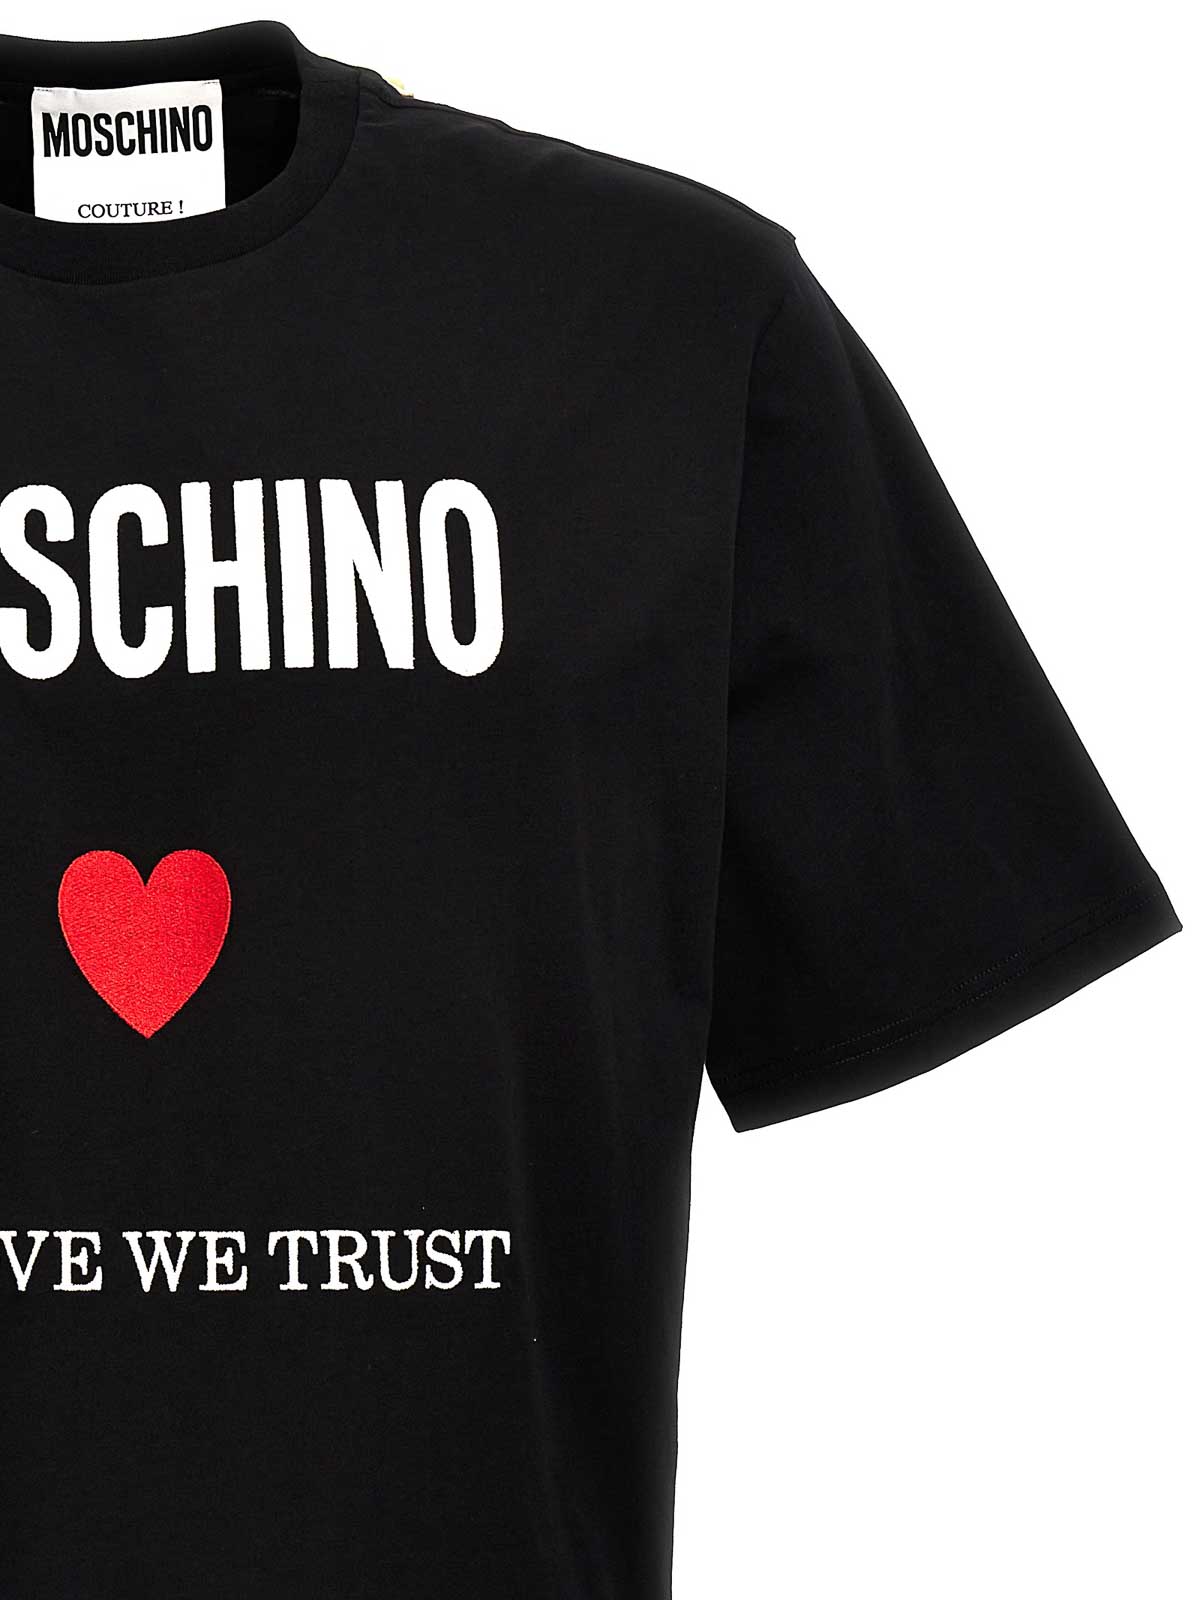 Shop Moschino Camiseta - In Love We Trust In Negro